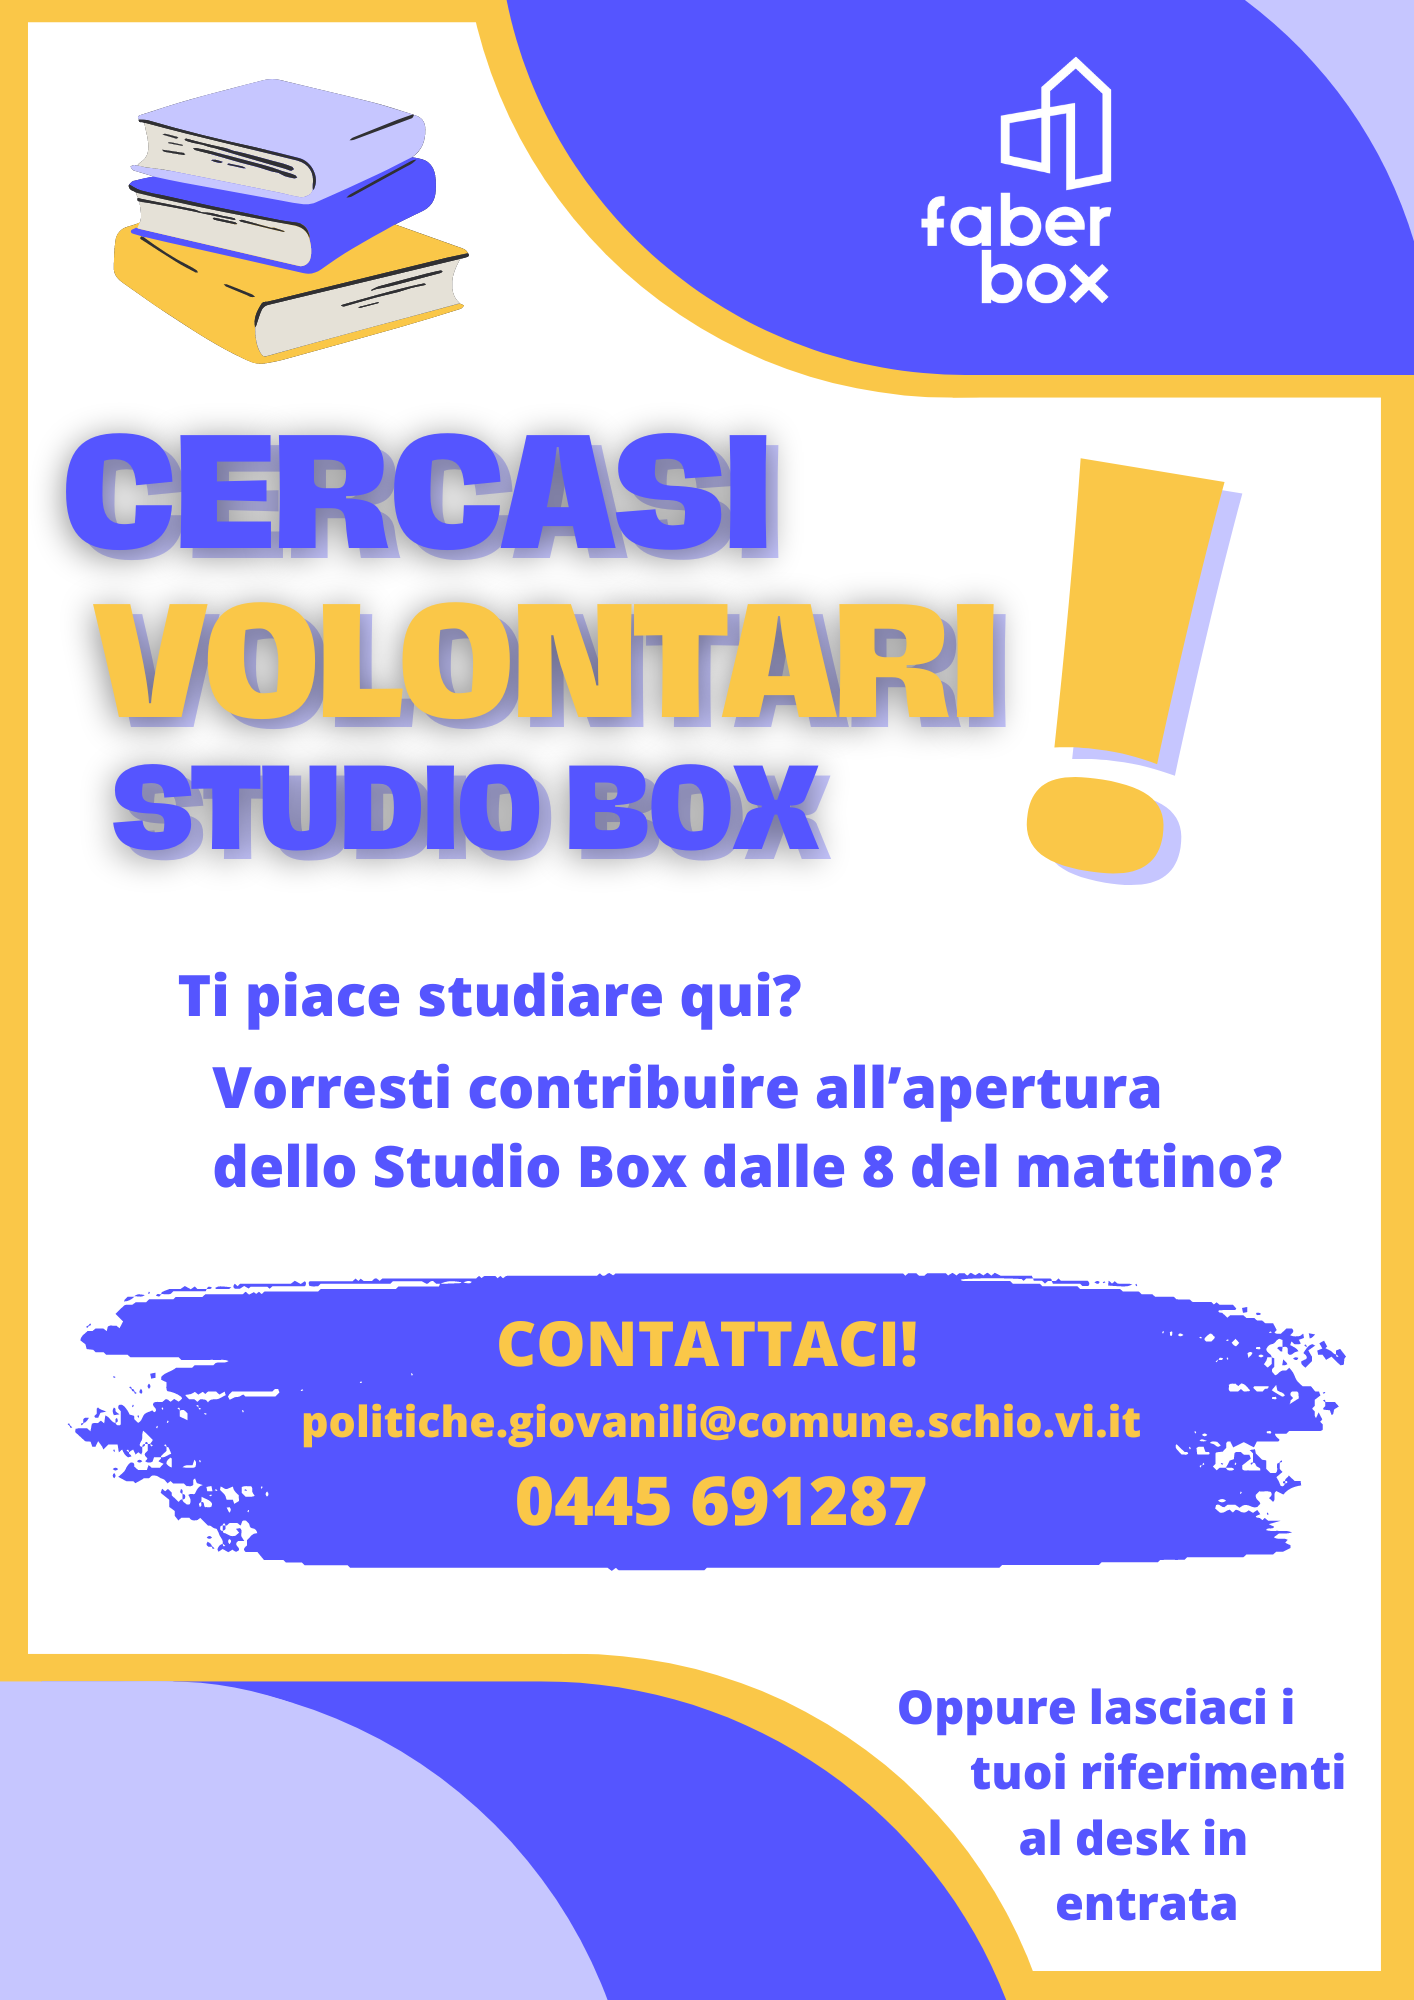 SOS Volontari Studio Box cercasi!